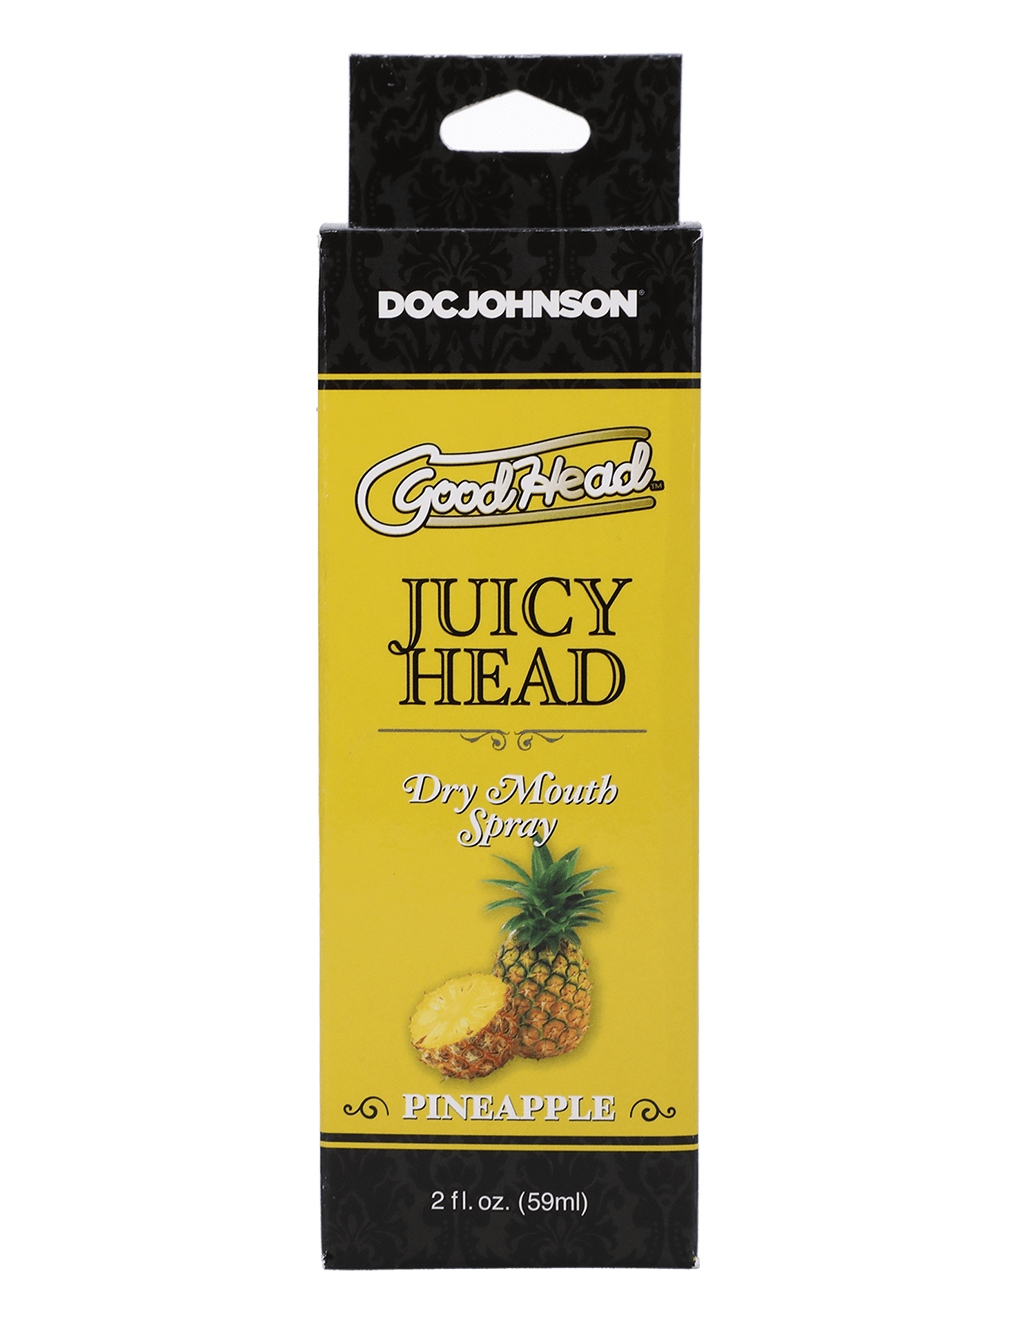 GoodHead Juicy Head - Pineapple - Box